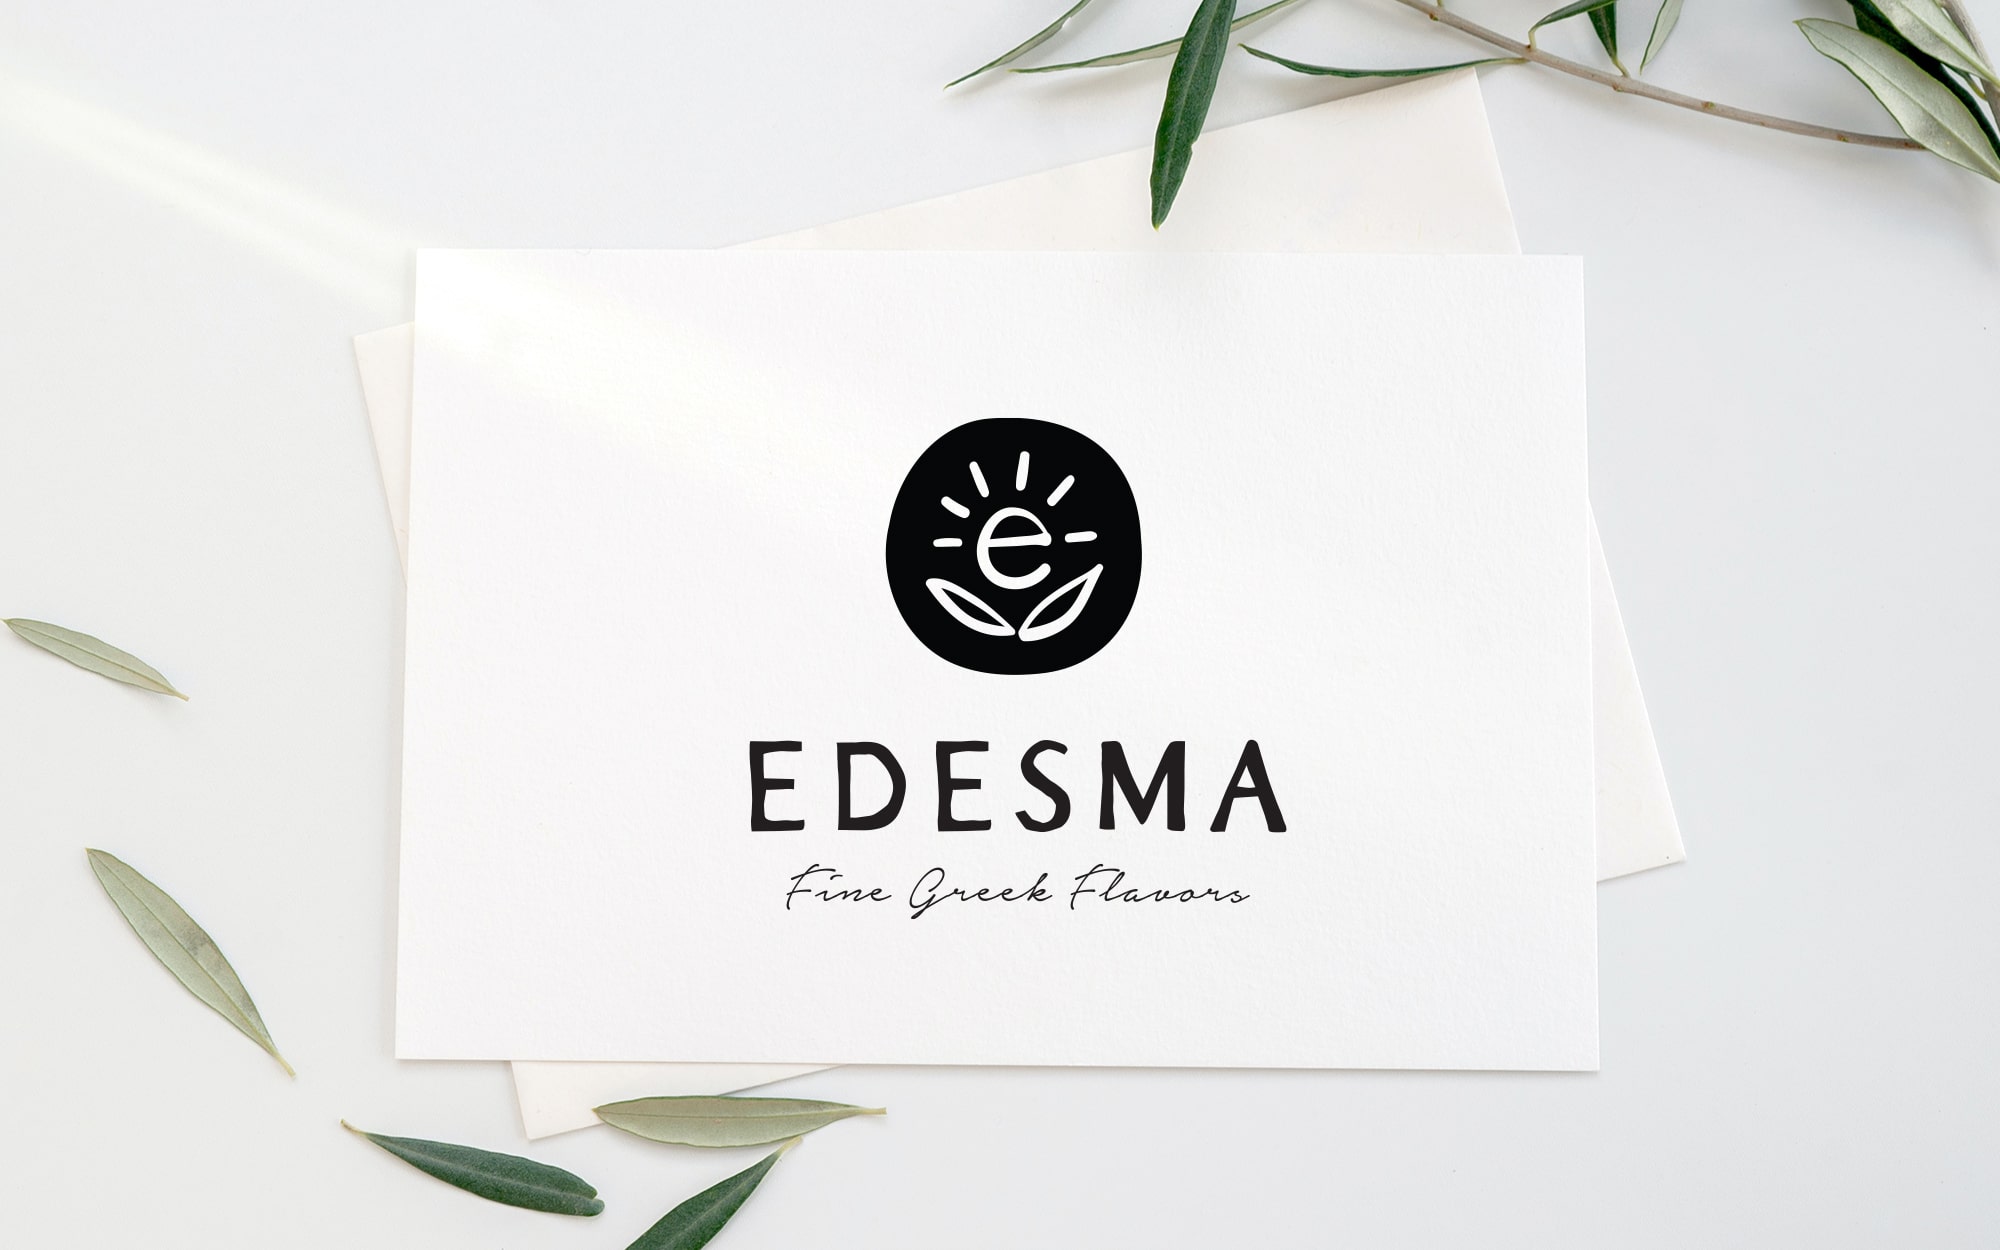 Edesma Fine Greek Flavours